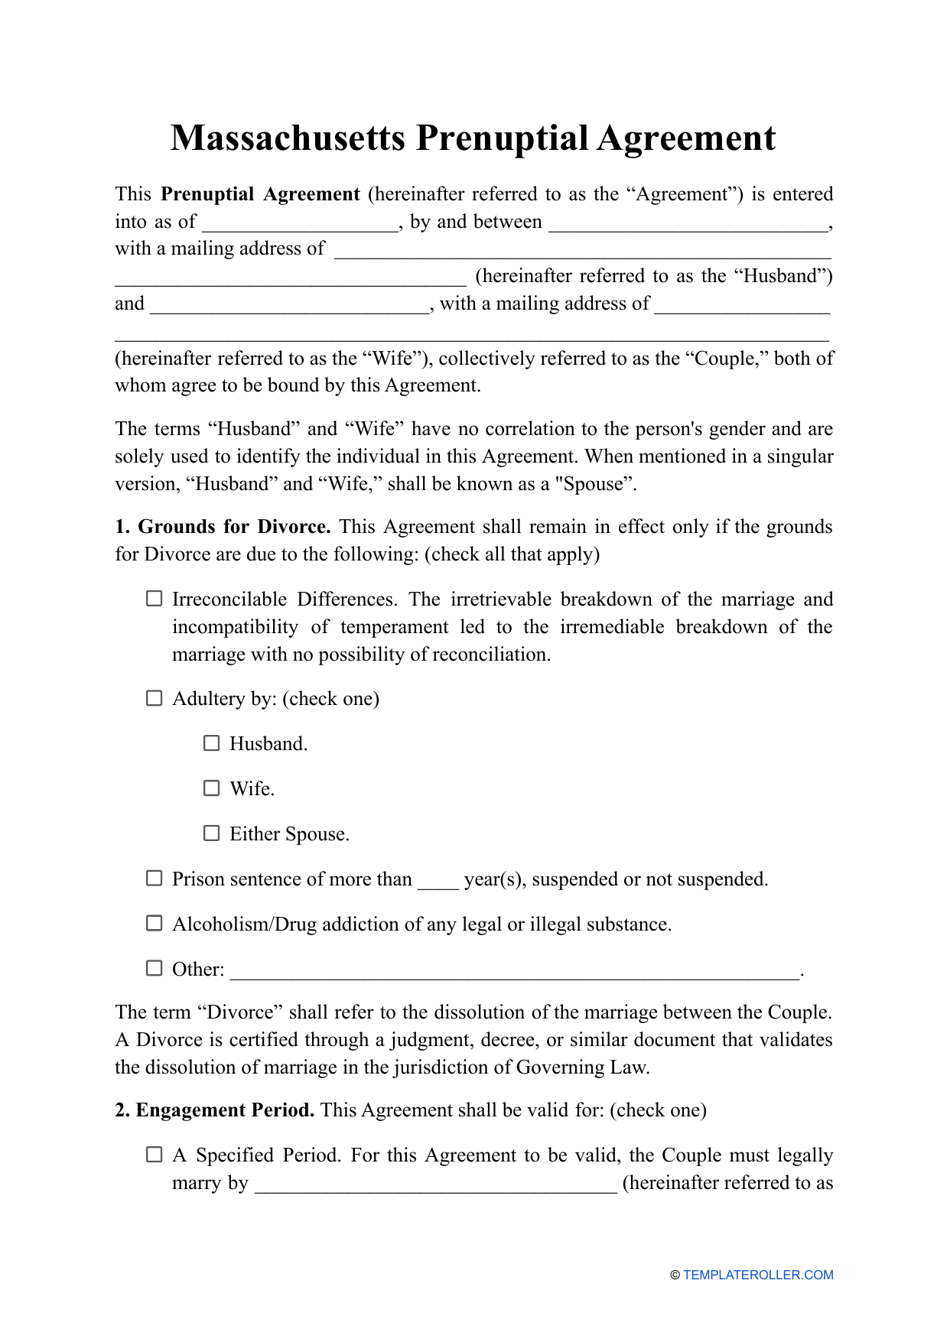 Prenuptial Agreement Template - Massachusetts, Page 1